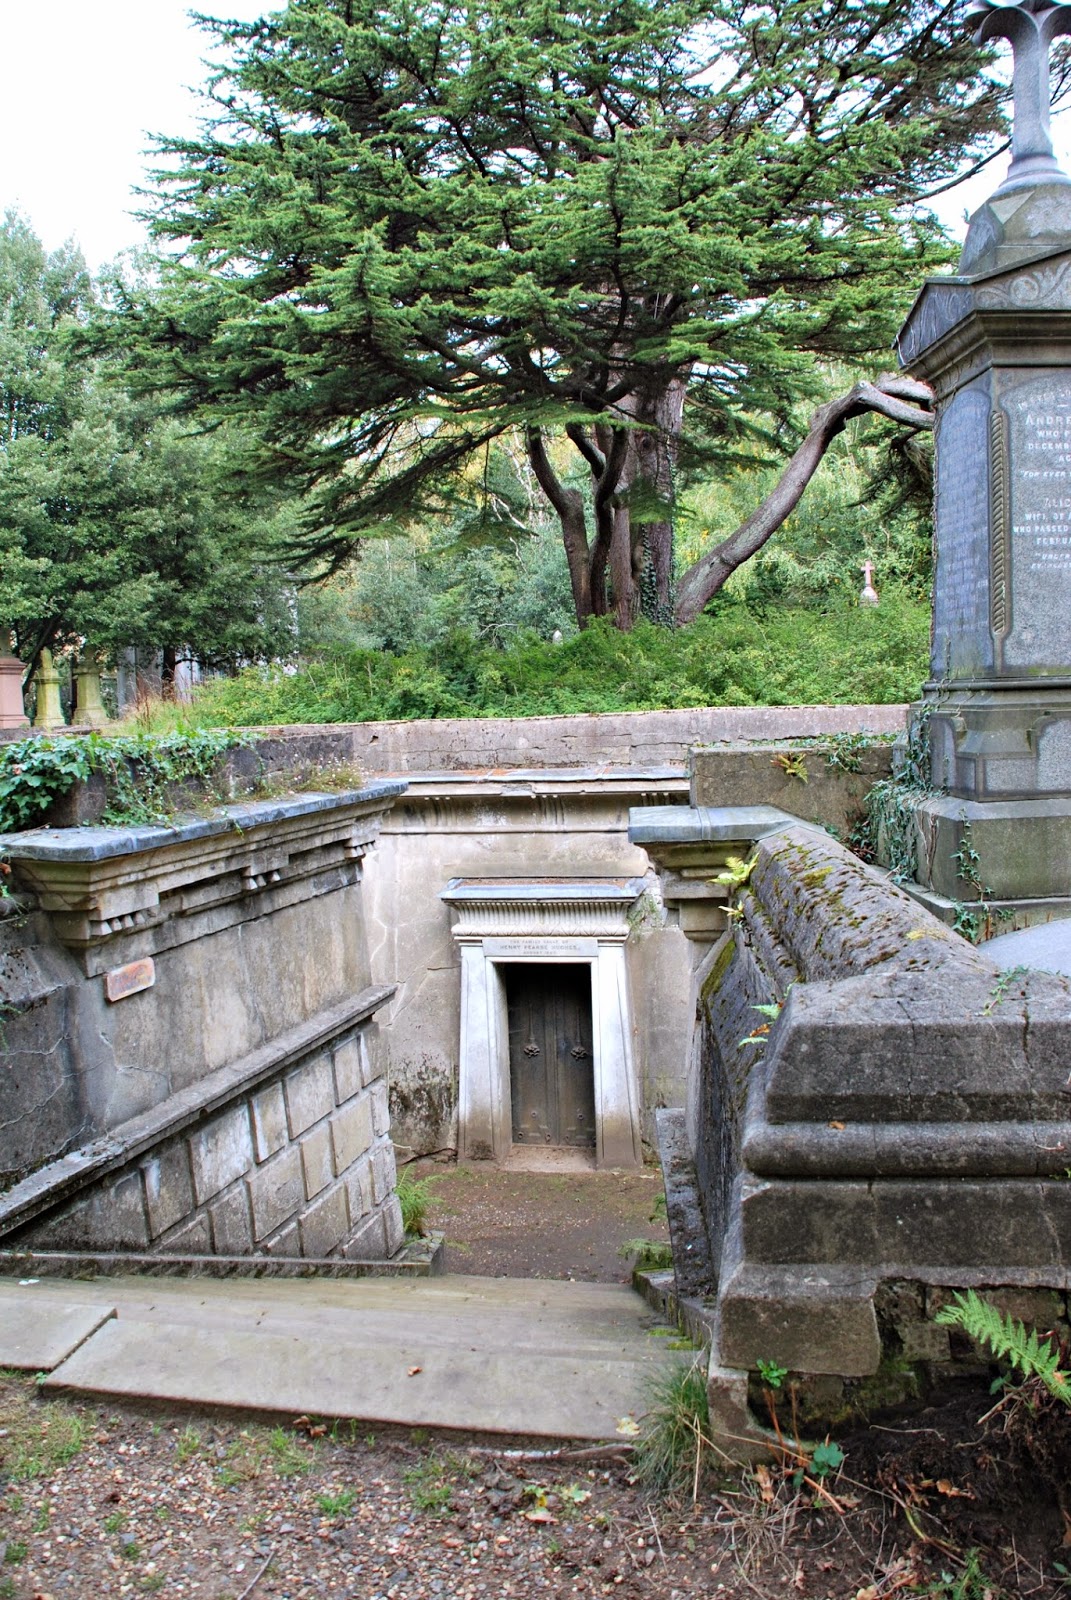 The Circle of Lebanon, Highgate Cemetery, London